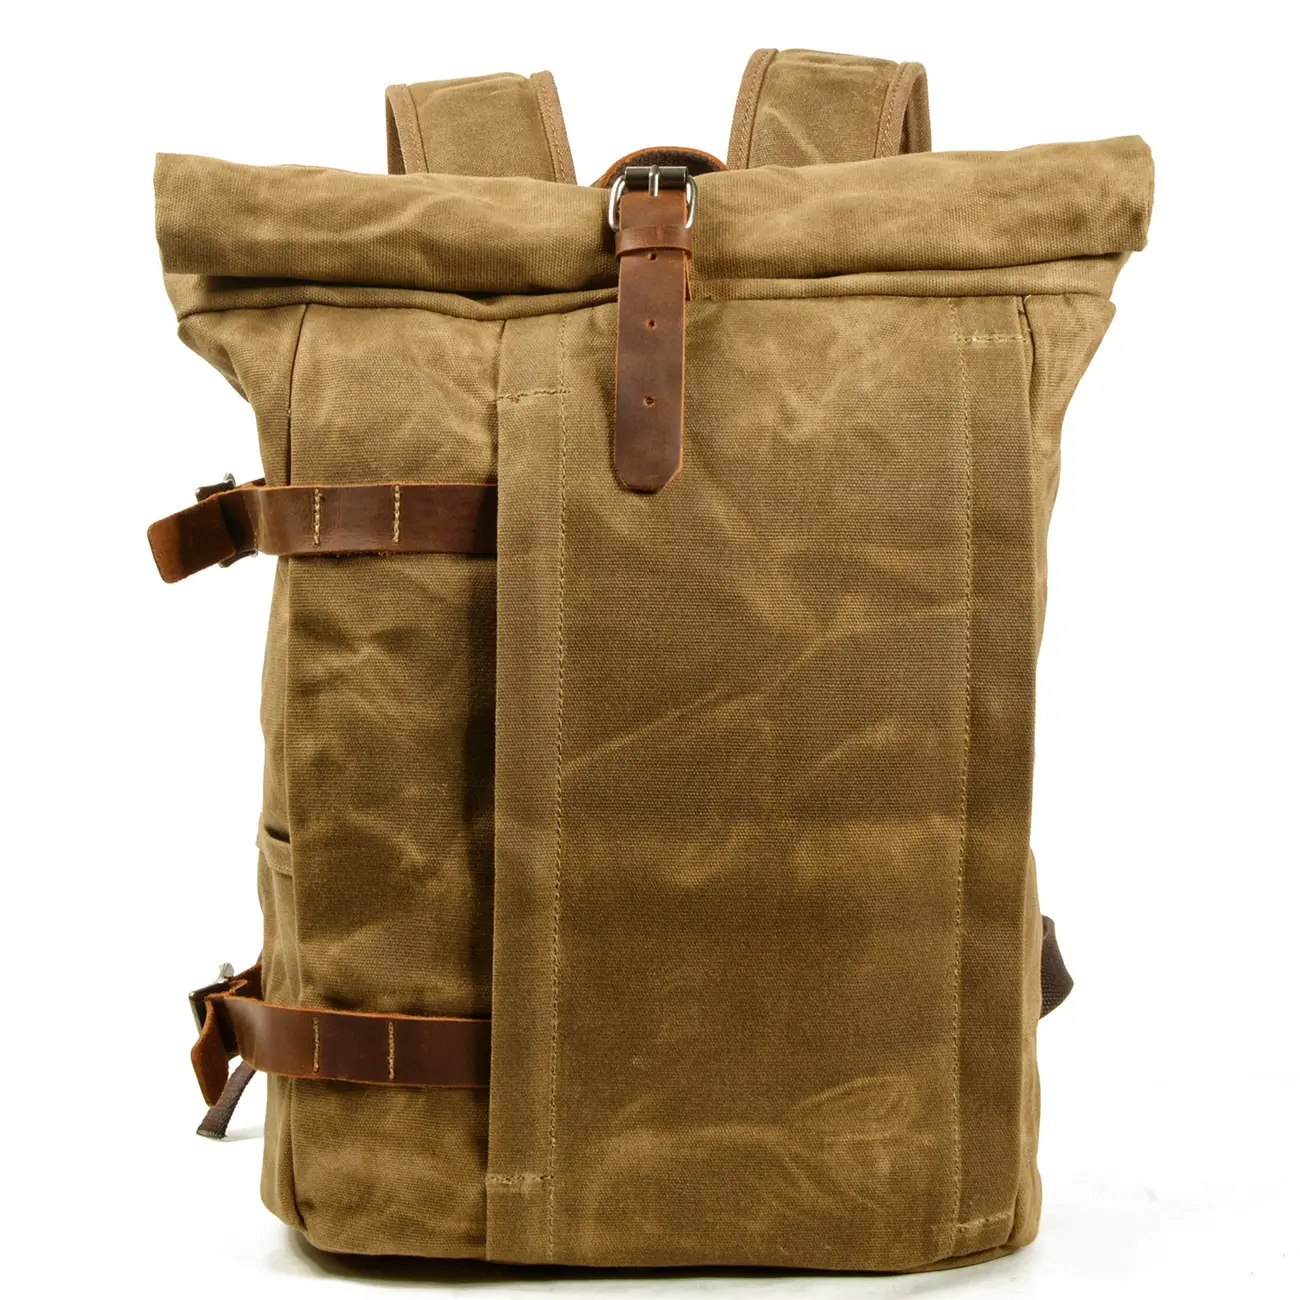 Wear-resistant waxed canvas hiking rucksack waterproof men's travel backpack anti-theft